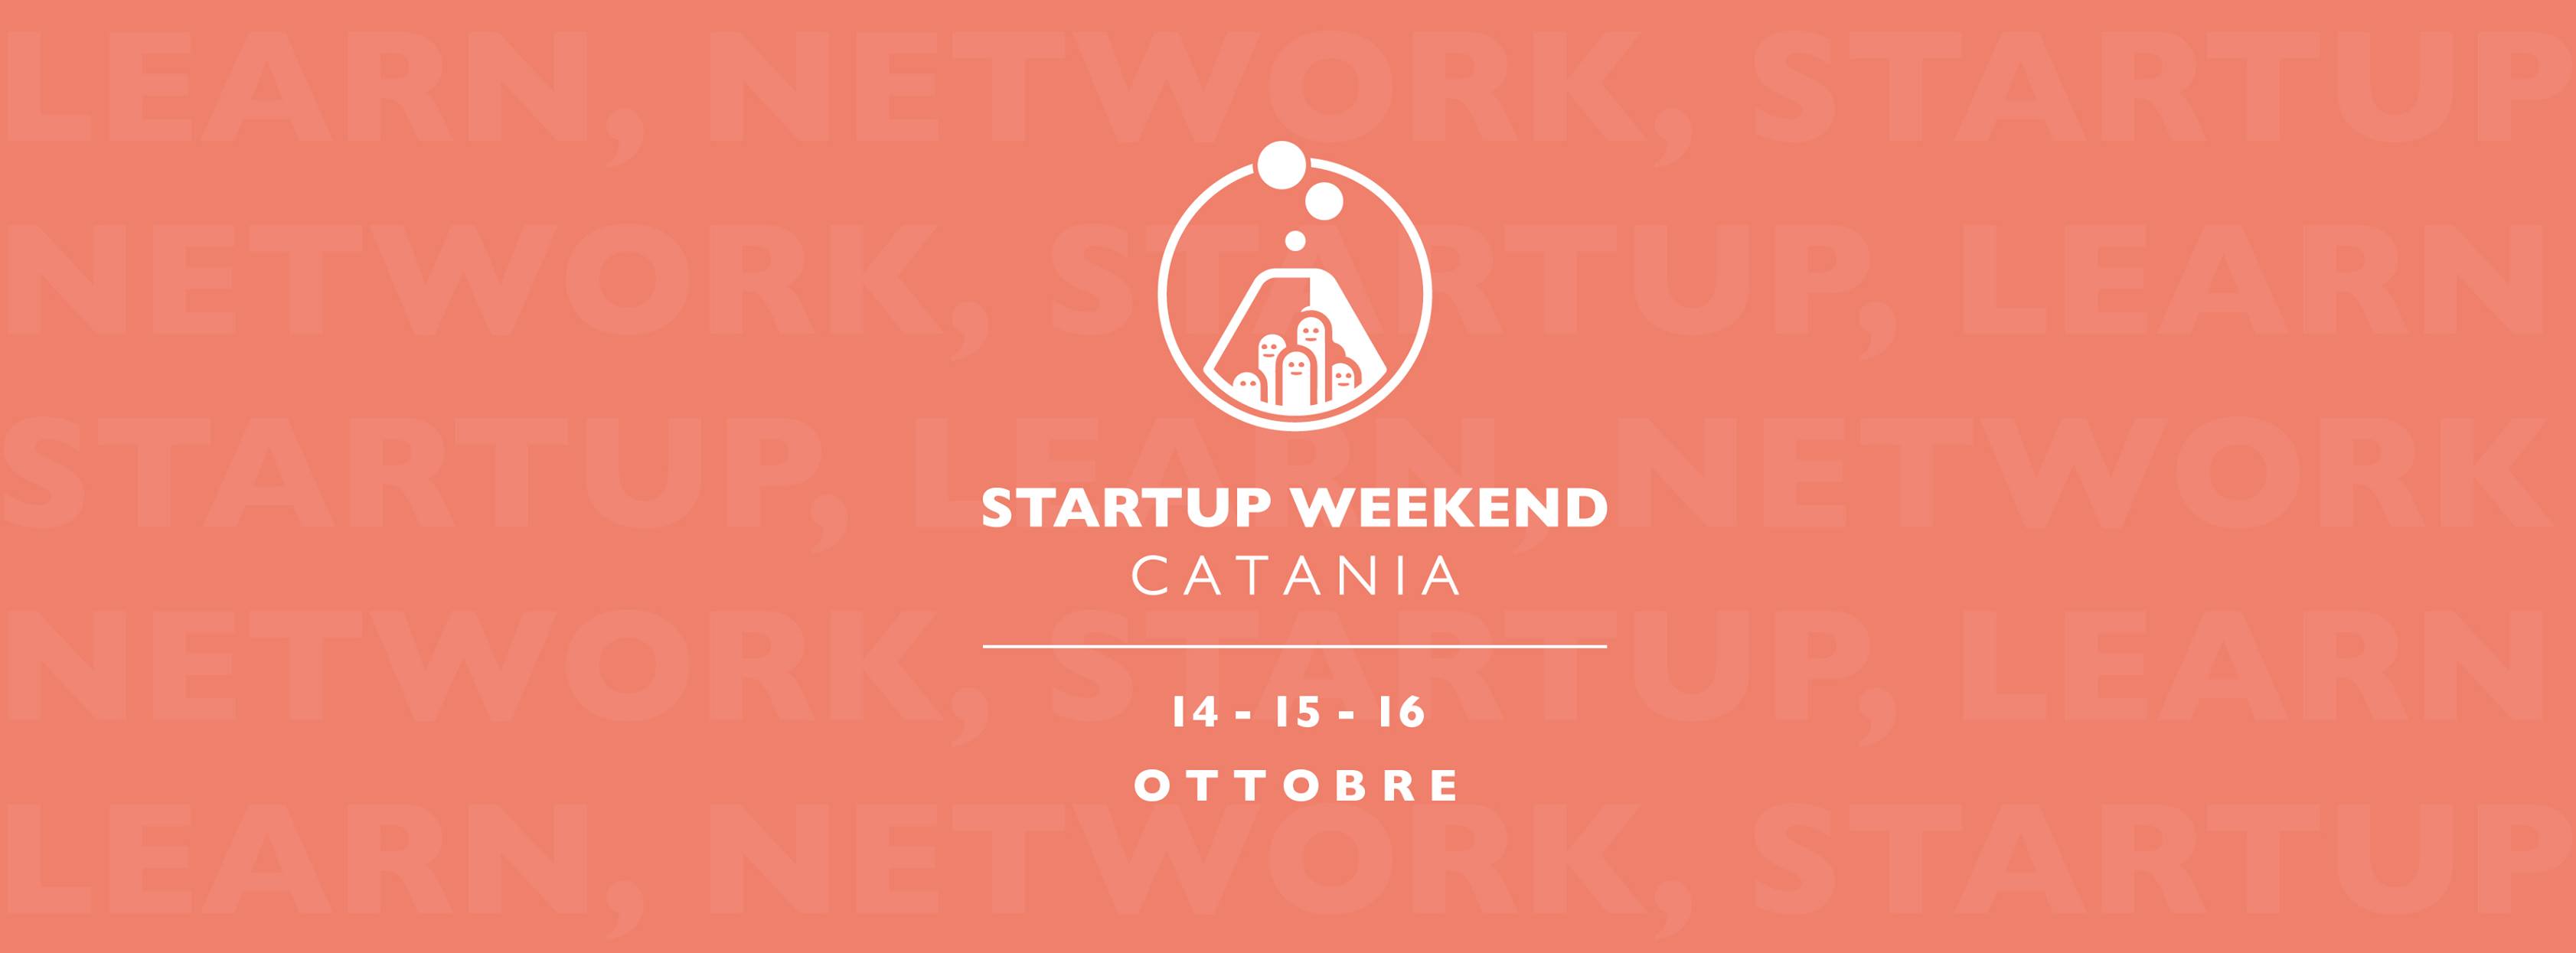 startup-weekend-catania_copertina